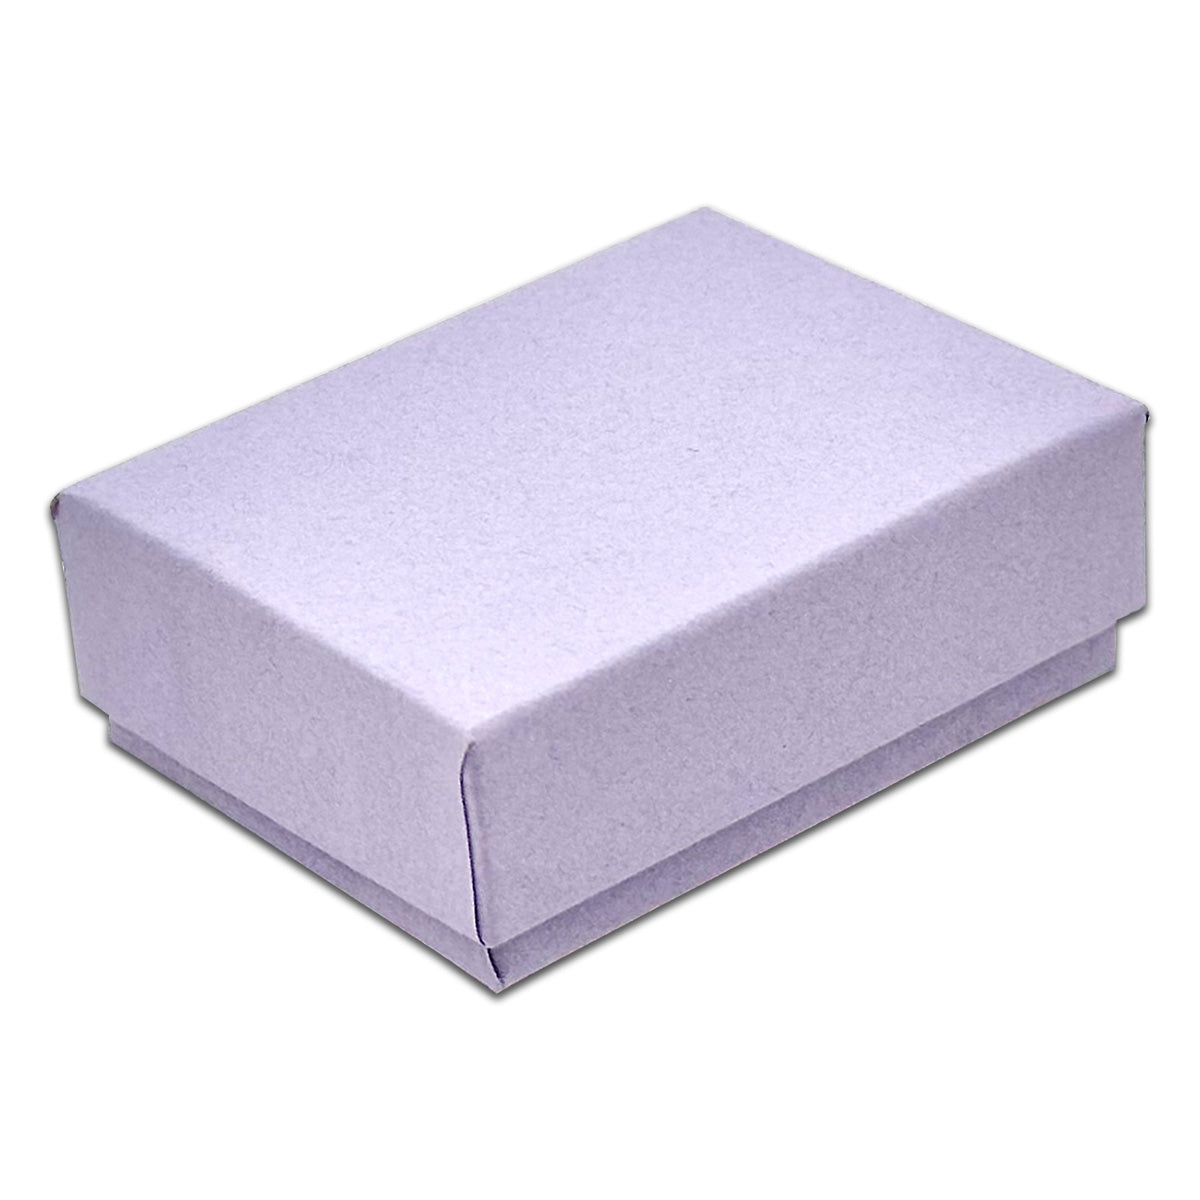 2 1/8" x 1 5/8" x 3/4" Light Lavender Cotton Filled Paper Box